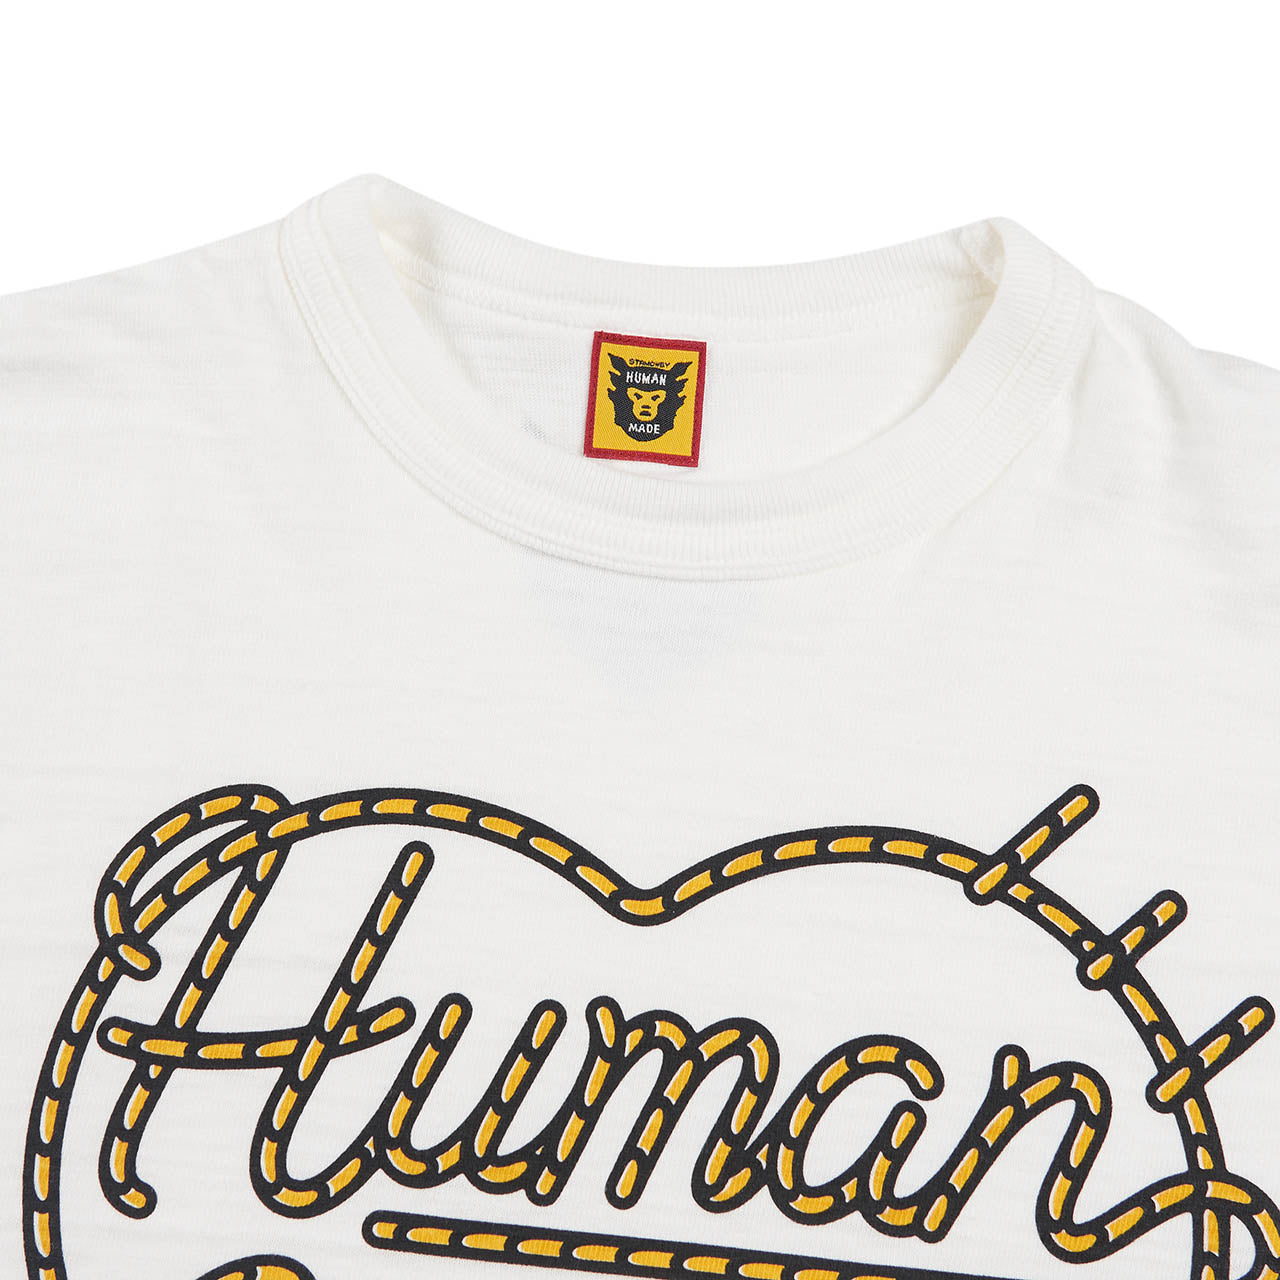 human made graphic t-shirt (weiß)